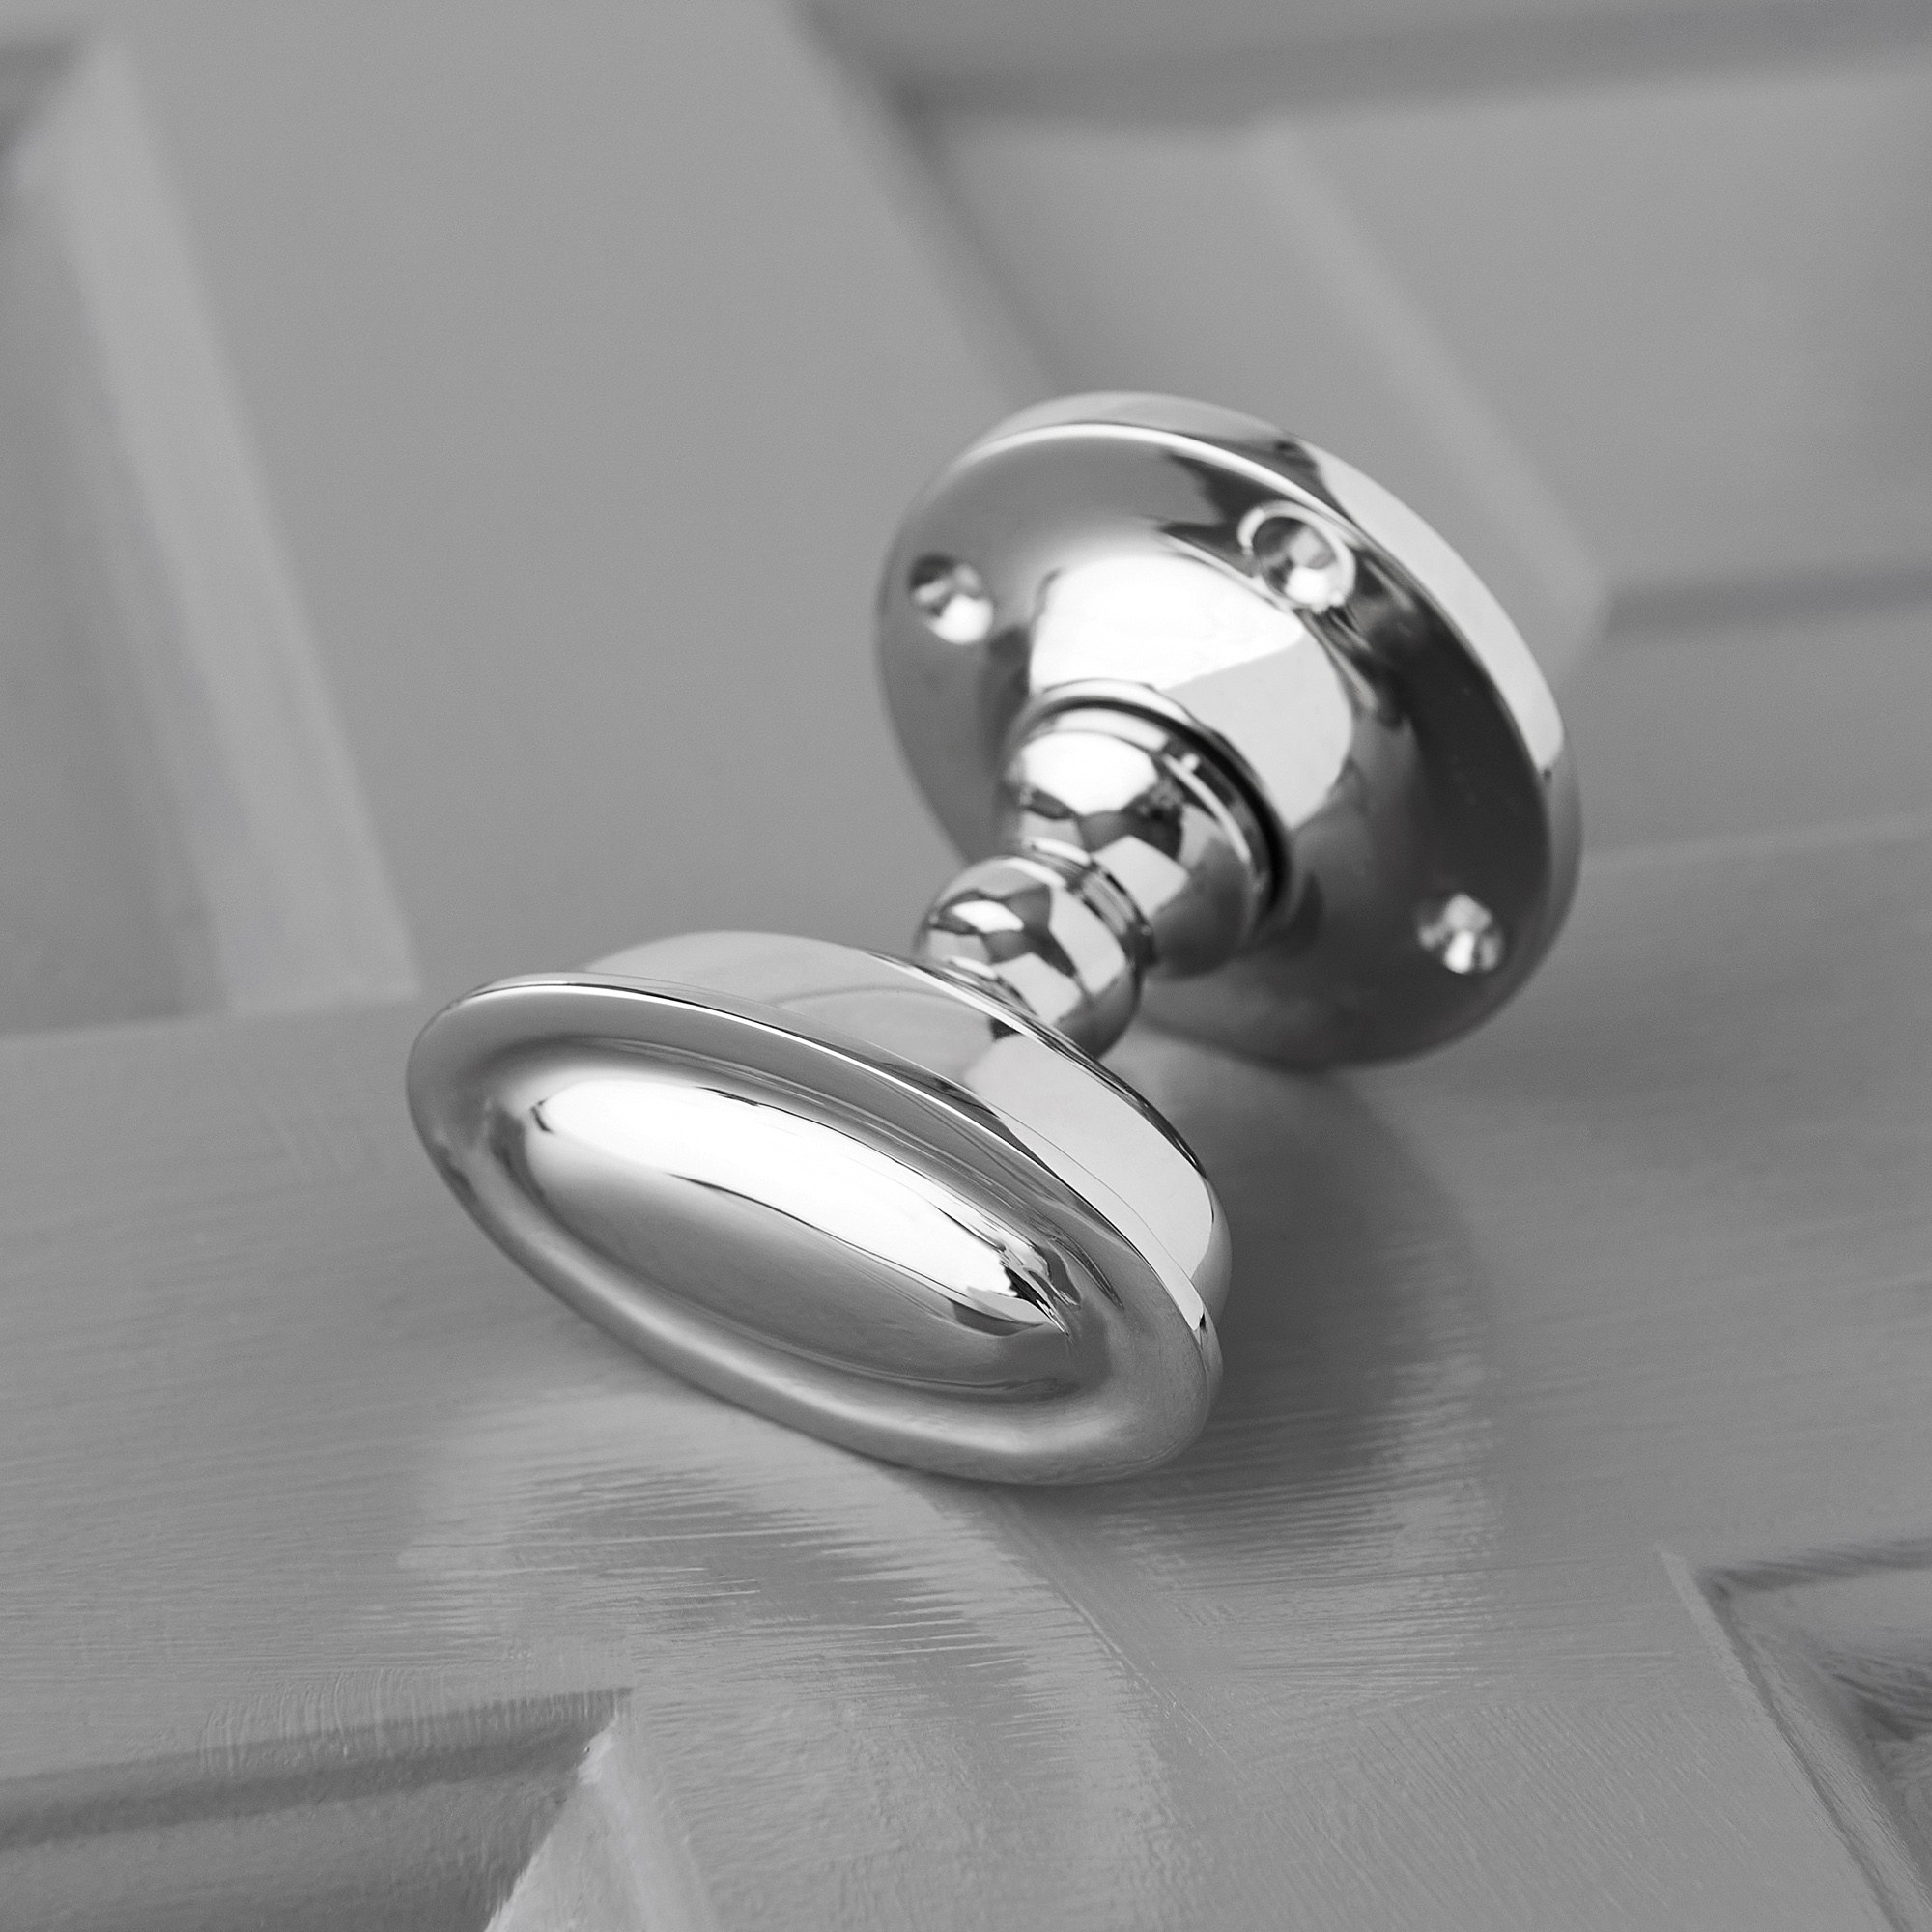 raised-oval-door-knobs-polished-nickel2